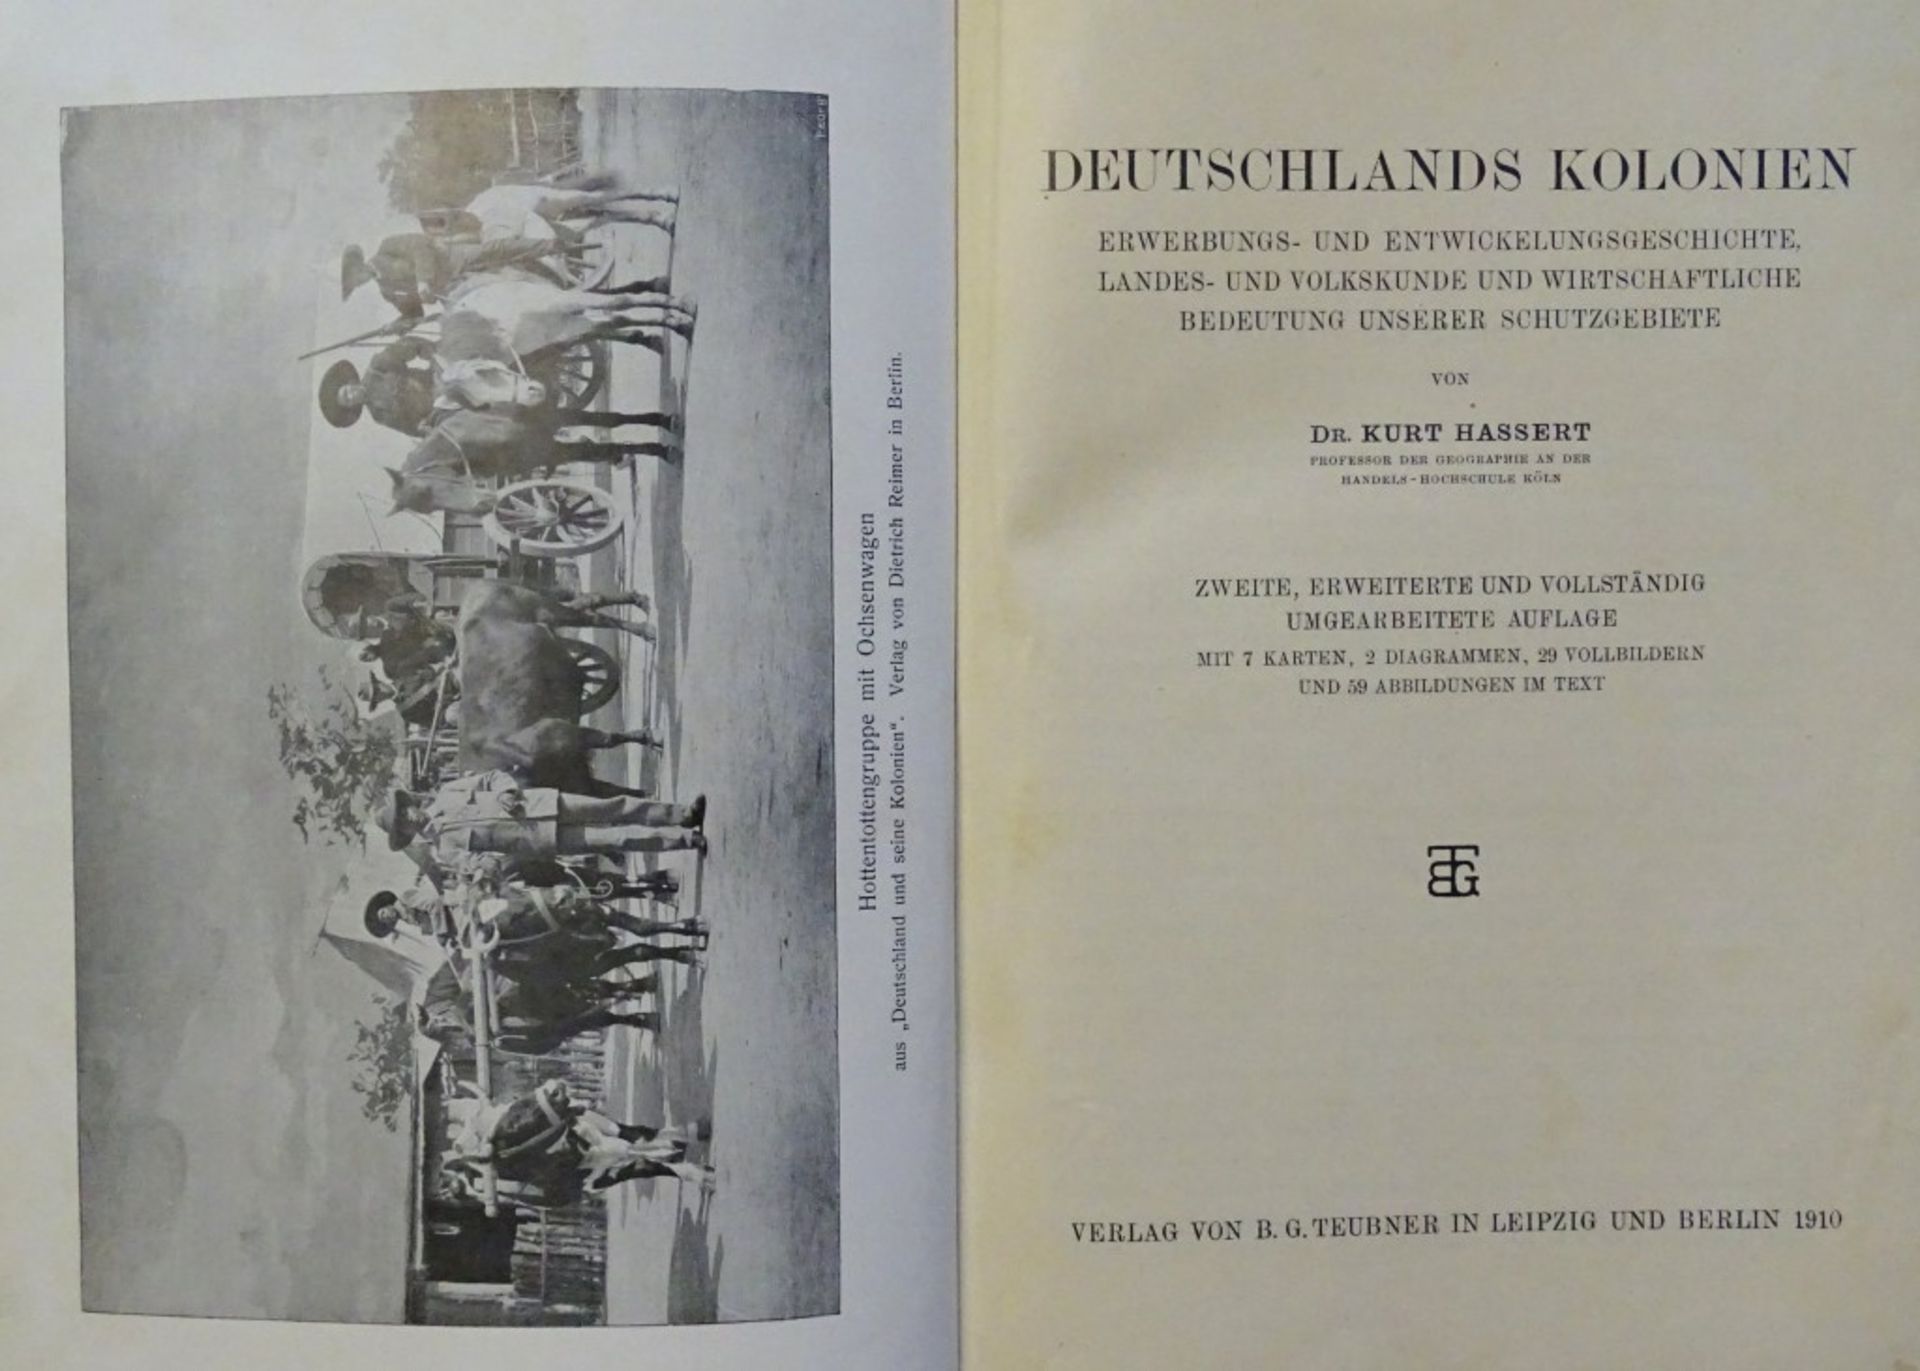 Deutschlands Kolonien von Kurt Hassert,Berlin 1910 - Image 2 of 6